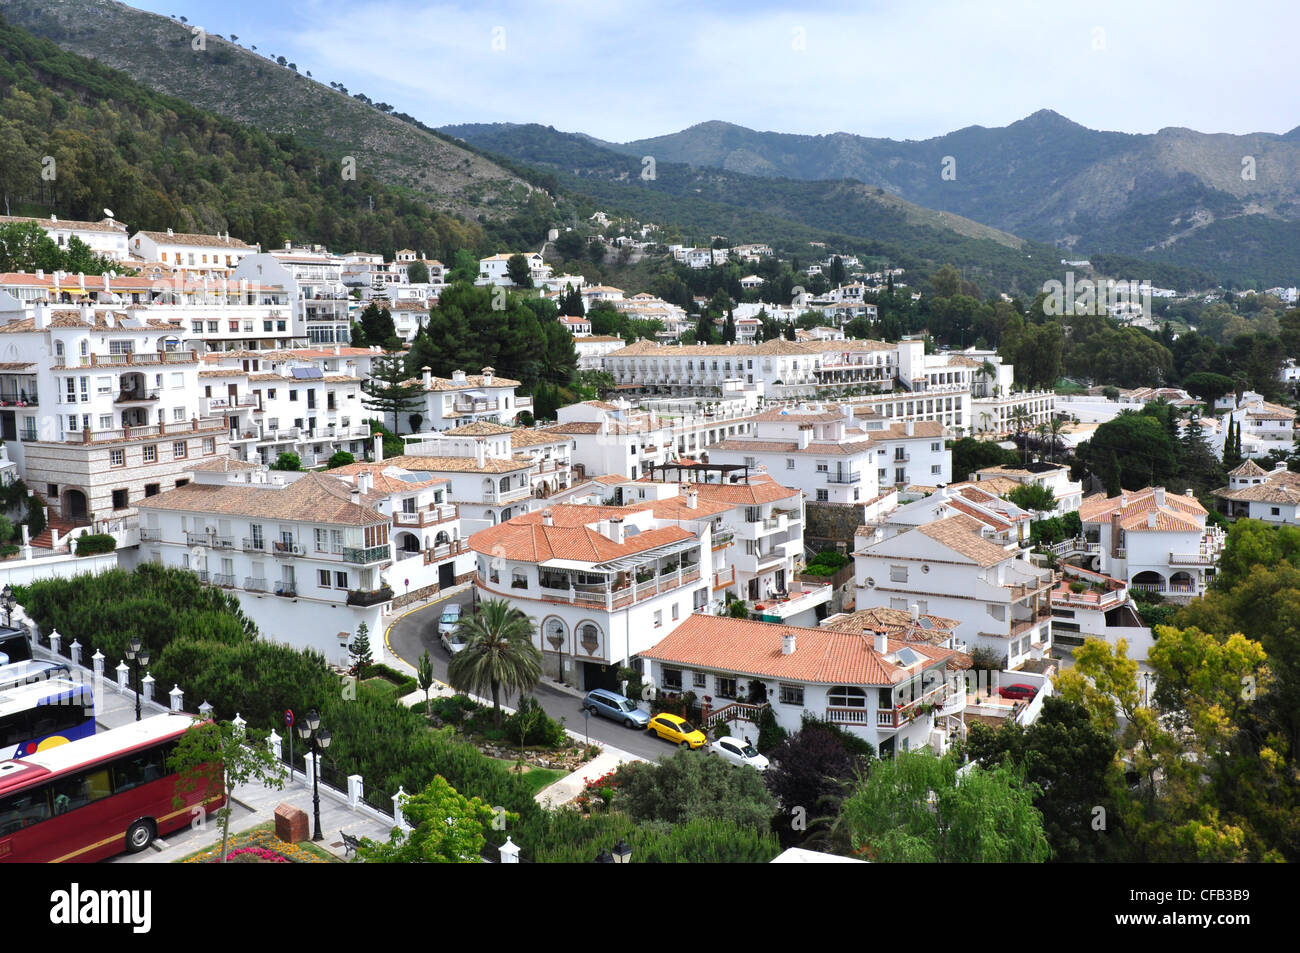 Spain - Andalucia - view over Mijas village - mountain backdrop - Costa del Sol Stock Photo